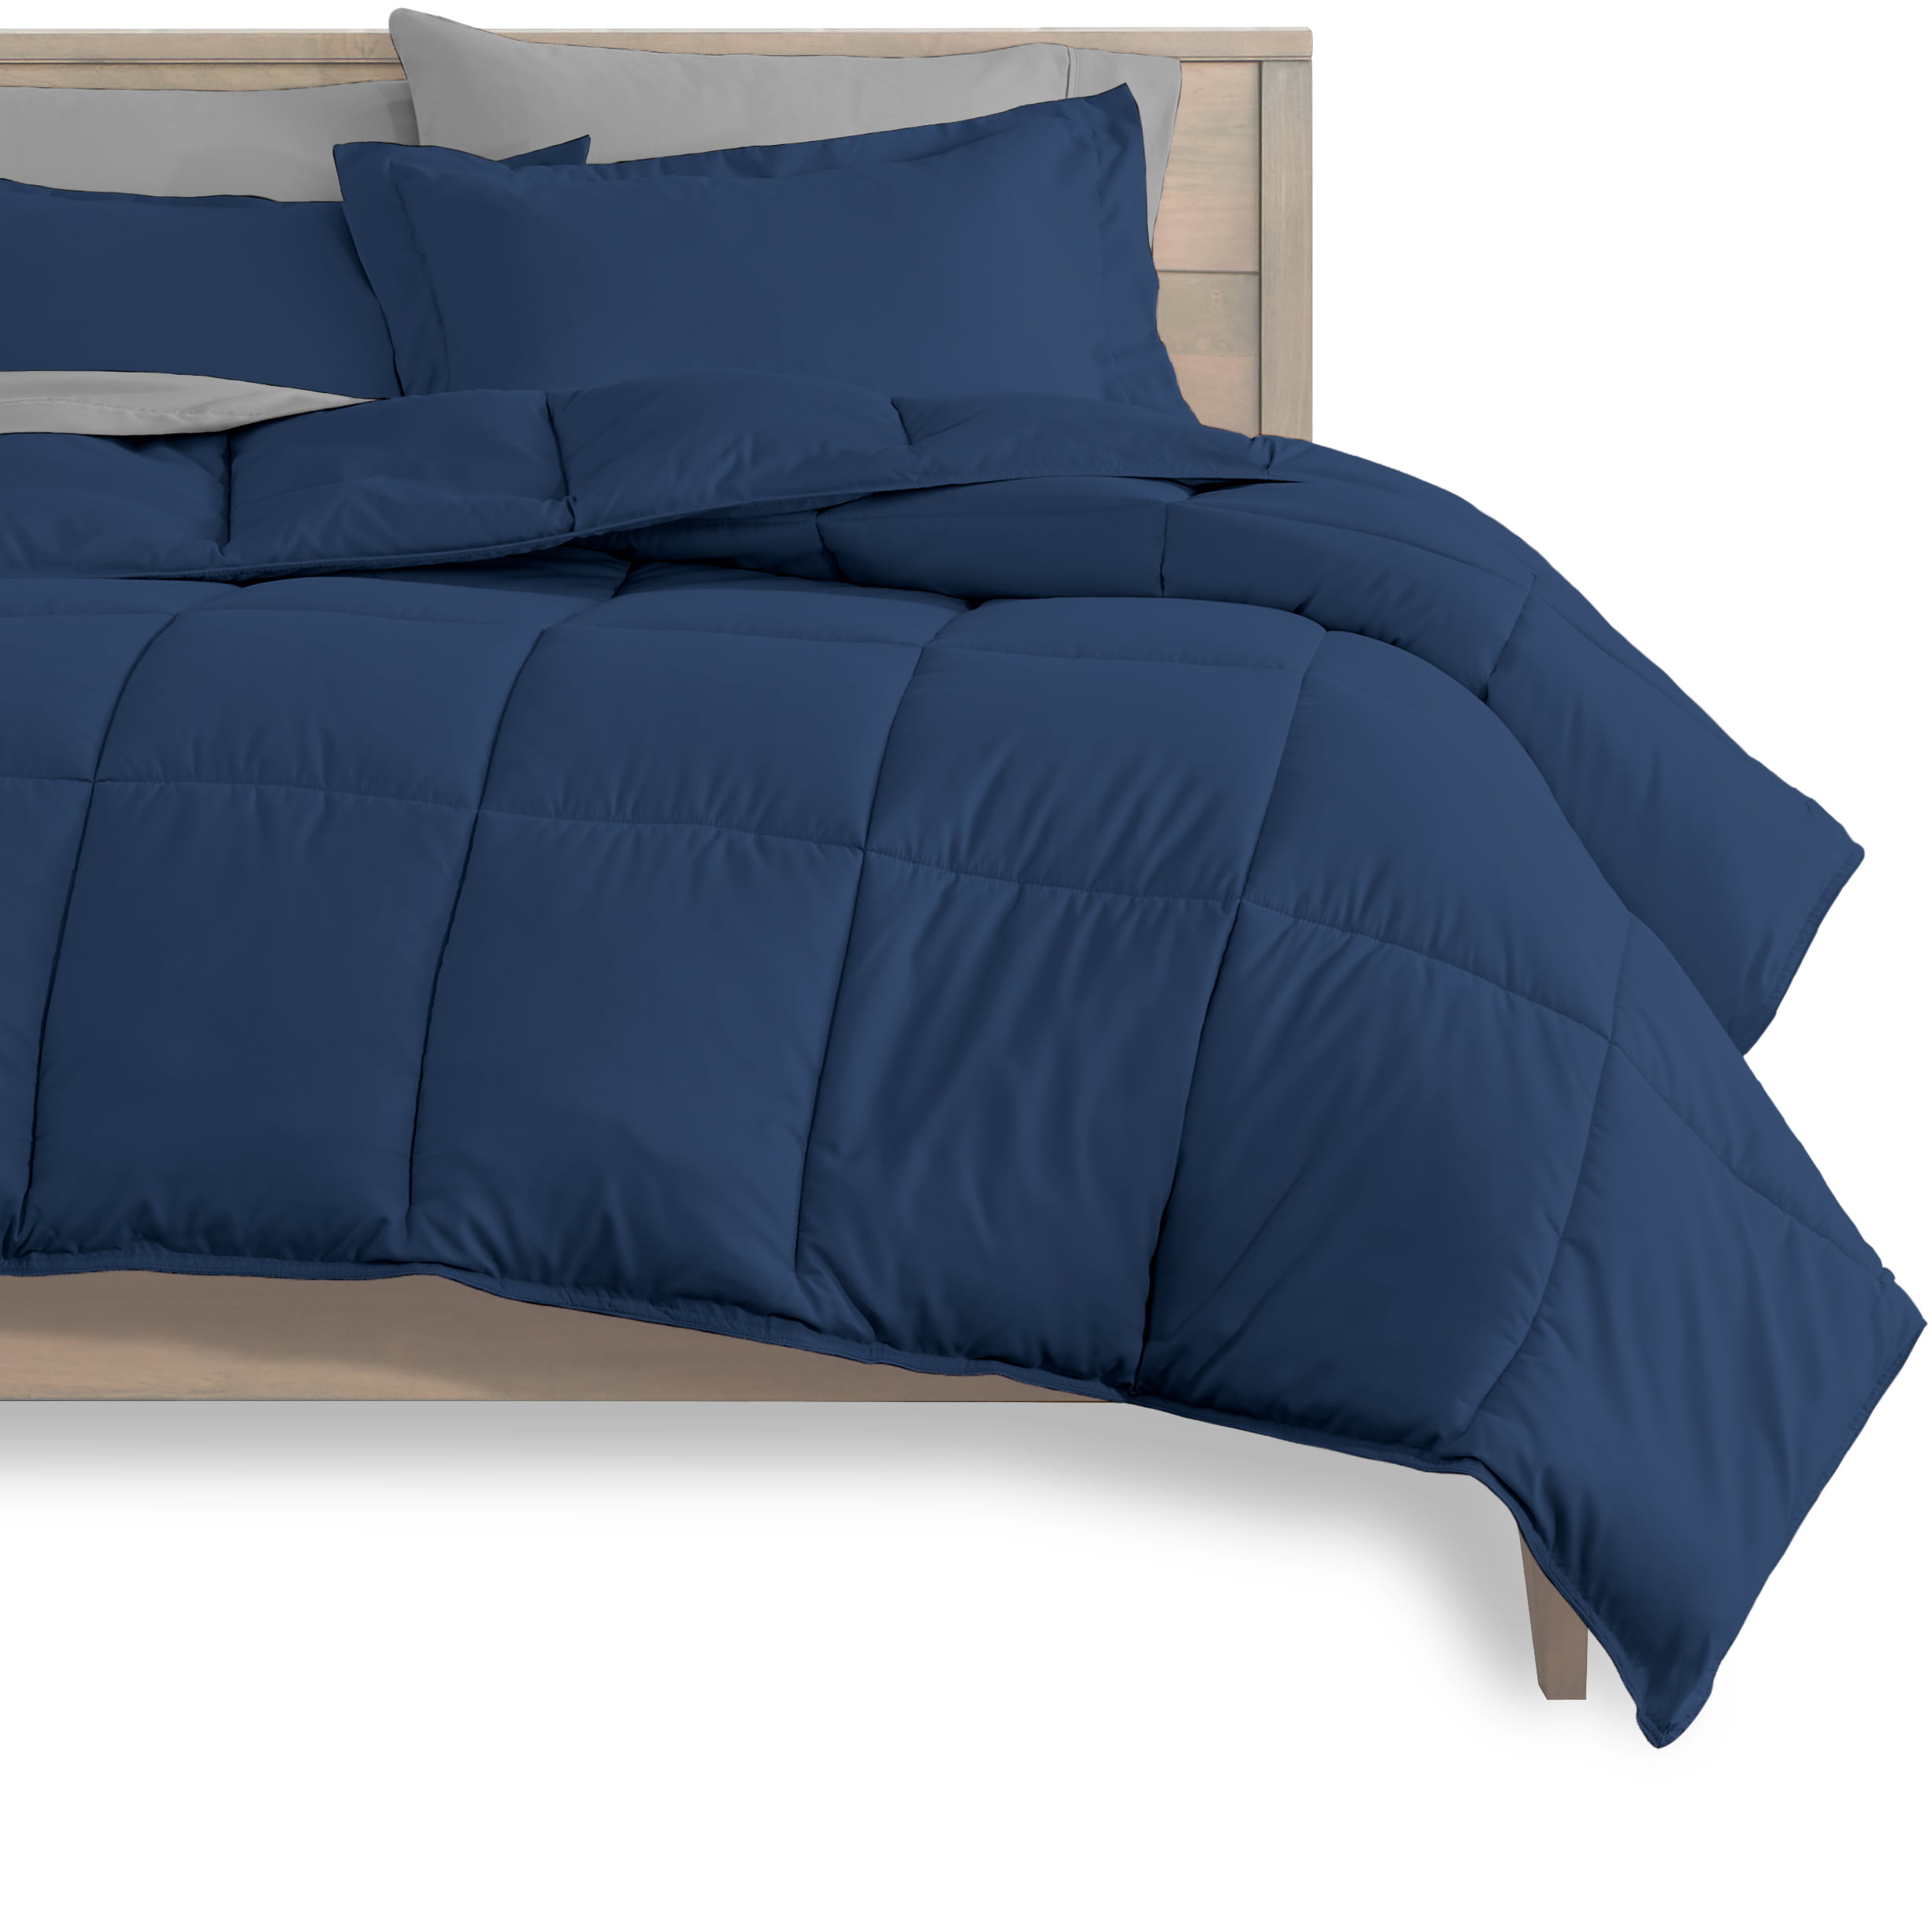 King Comforter Set, Dark Blue King Size Duvet Set